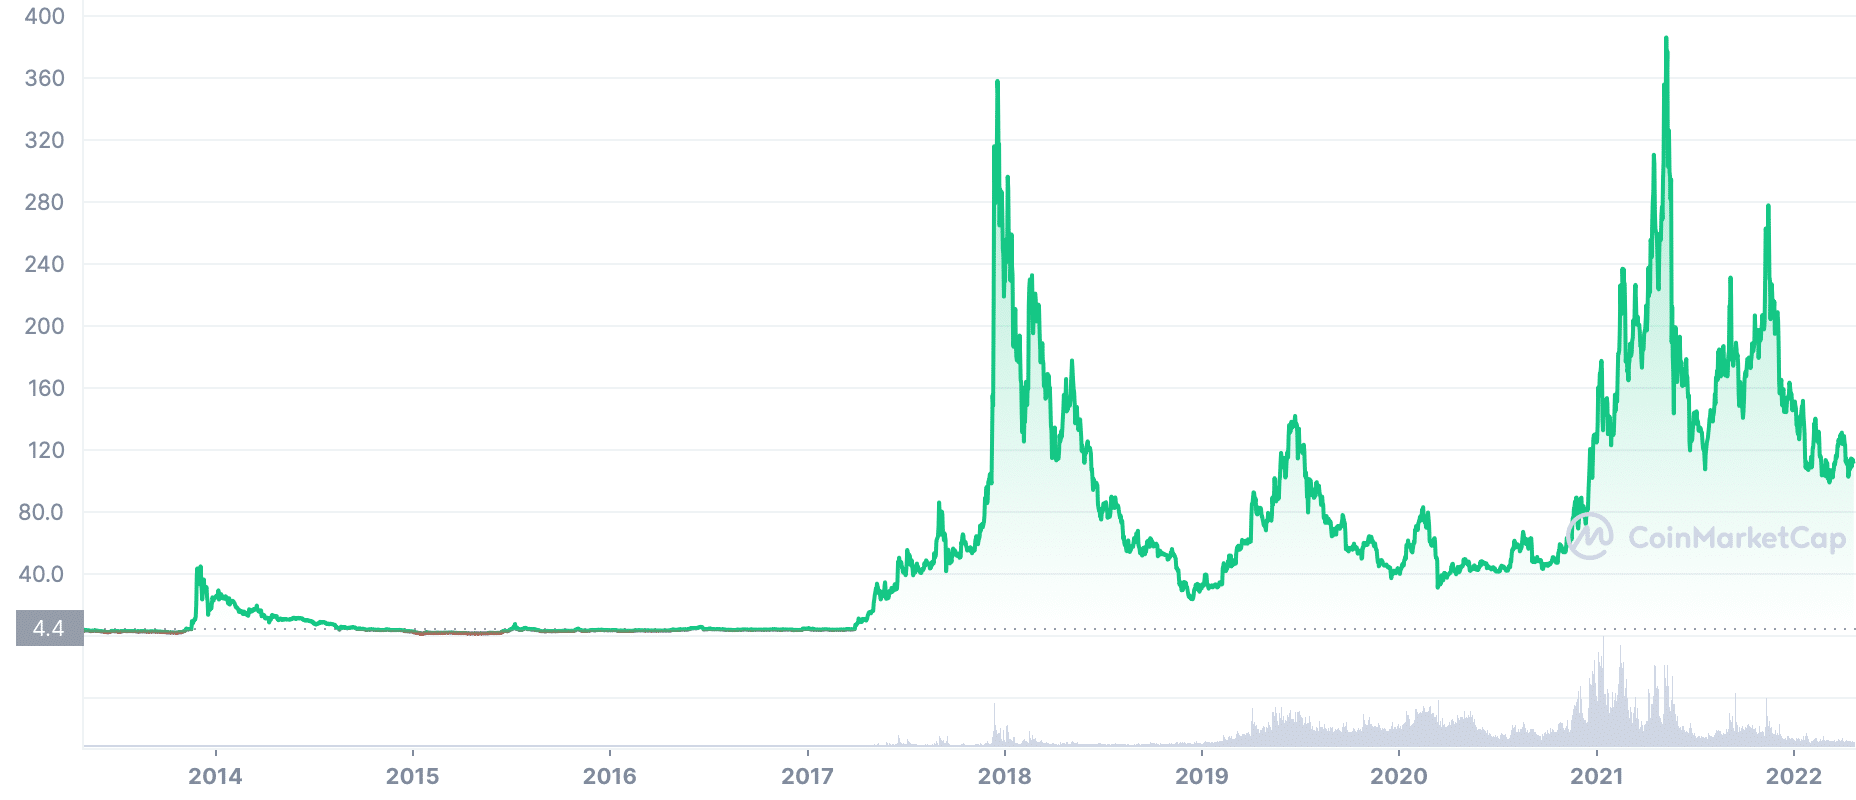 Litecoin (LTC) price, market cap | $ | Chart | COIN